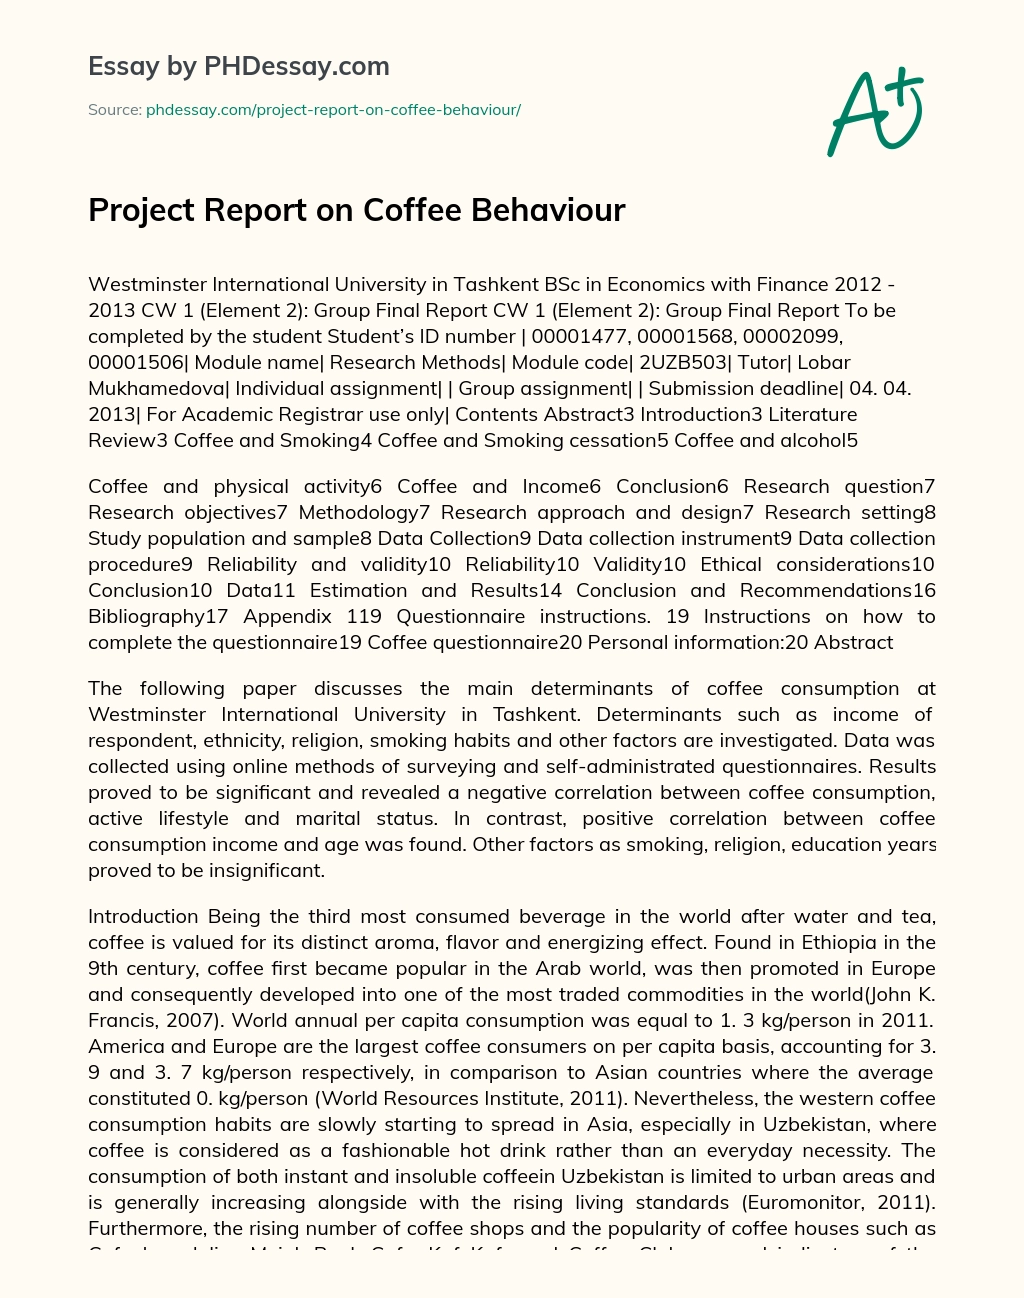 Project Report on Coffee Behaviour essay